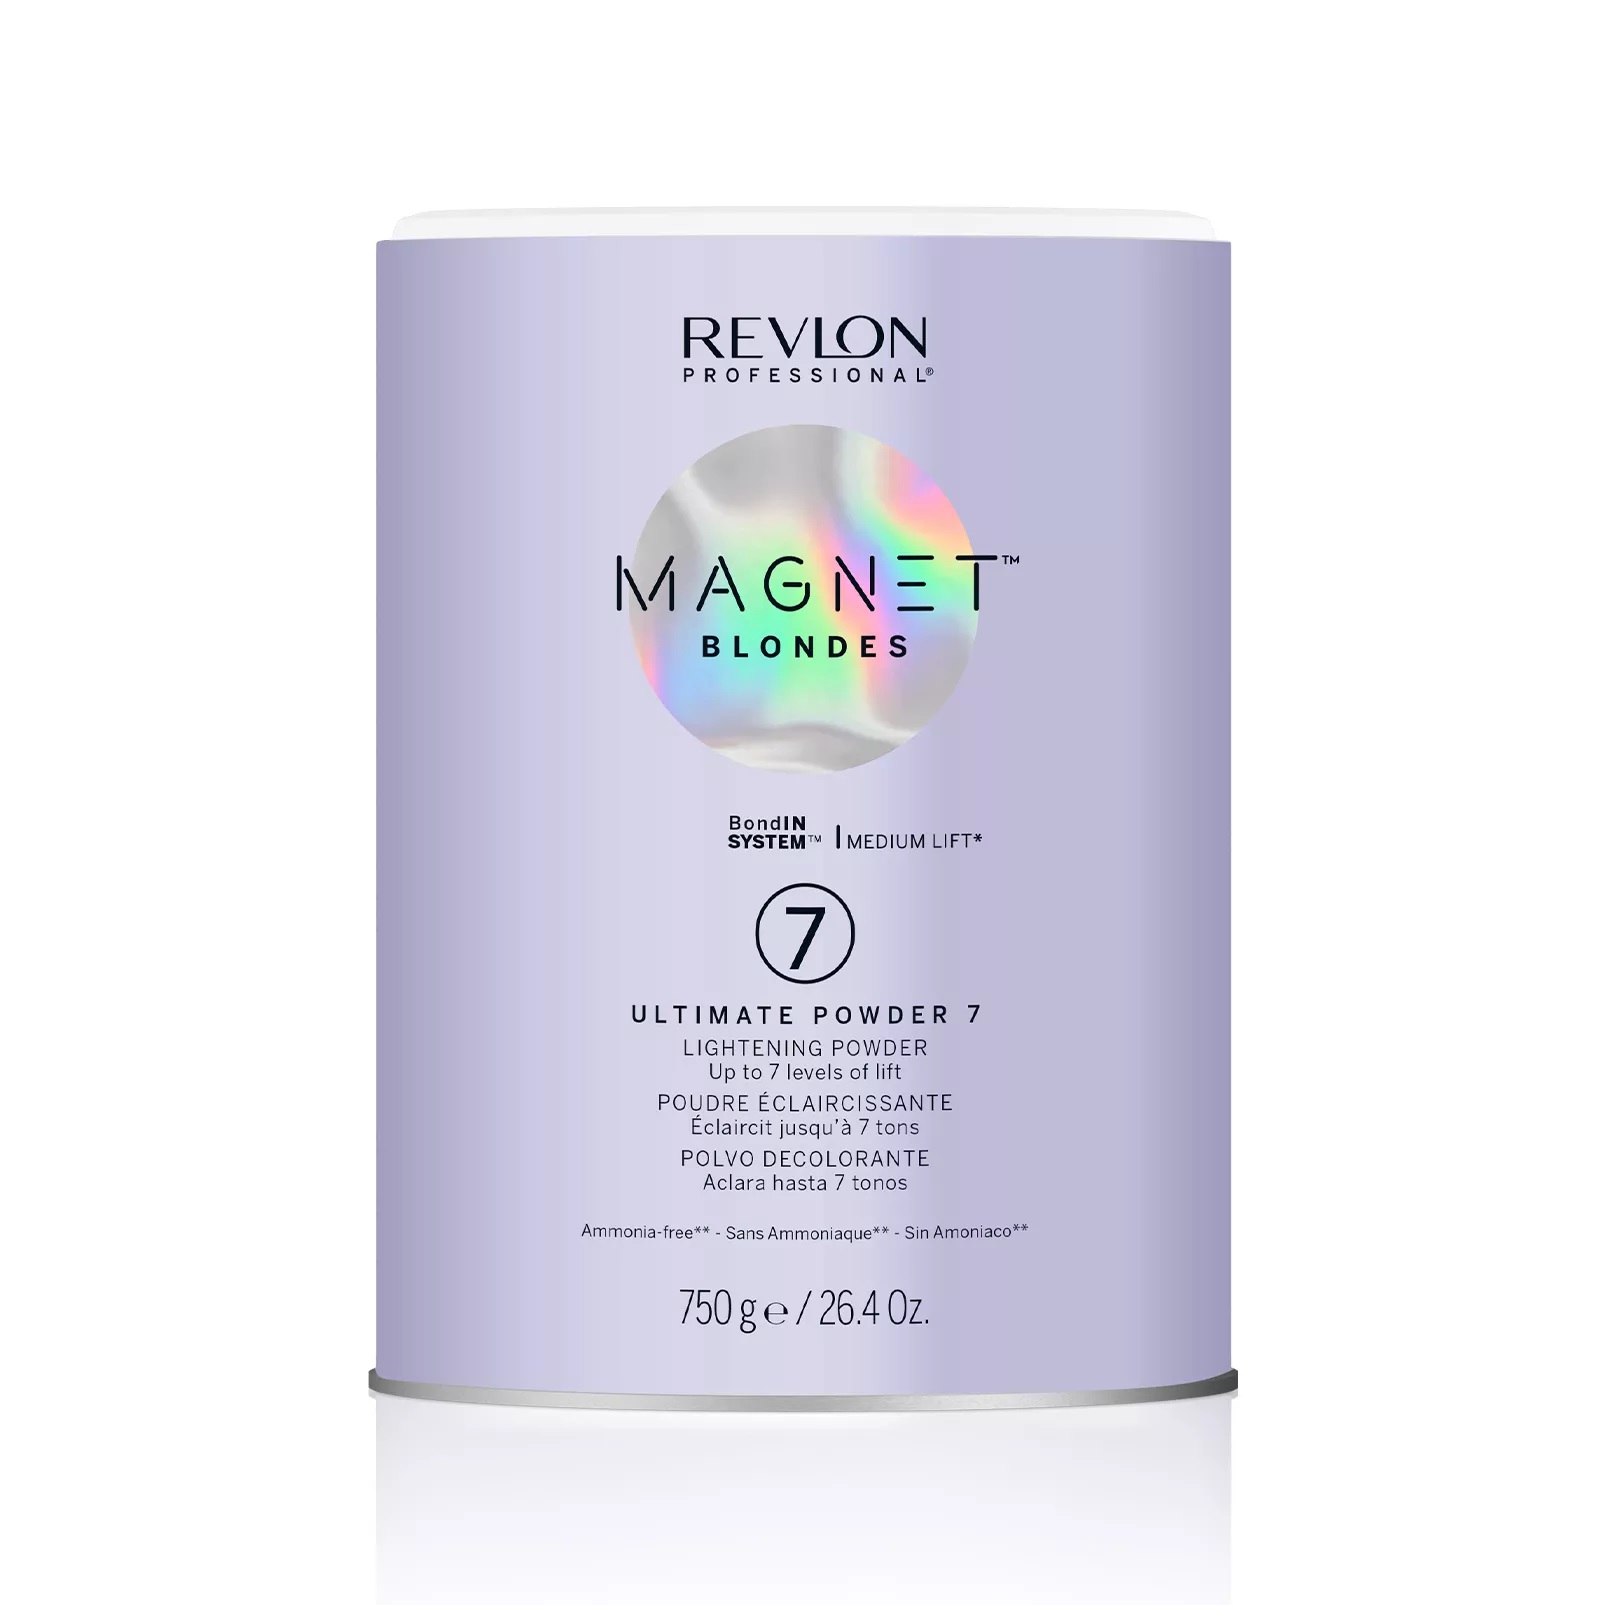 REVLON, Нелетучая осветляющая пудра 7 Ultimate Powder Lightening Powder Magnet Blondes, 750 гр.